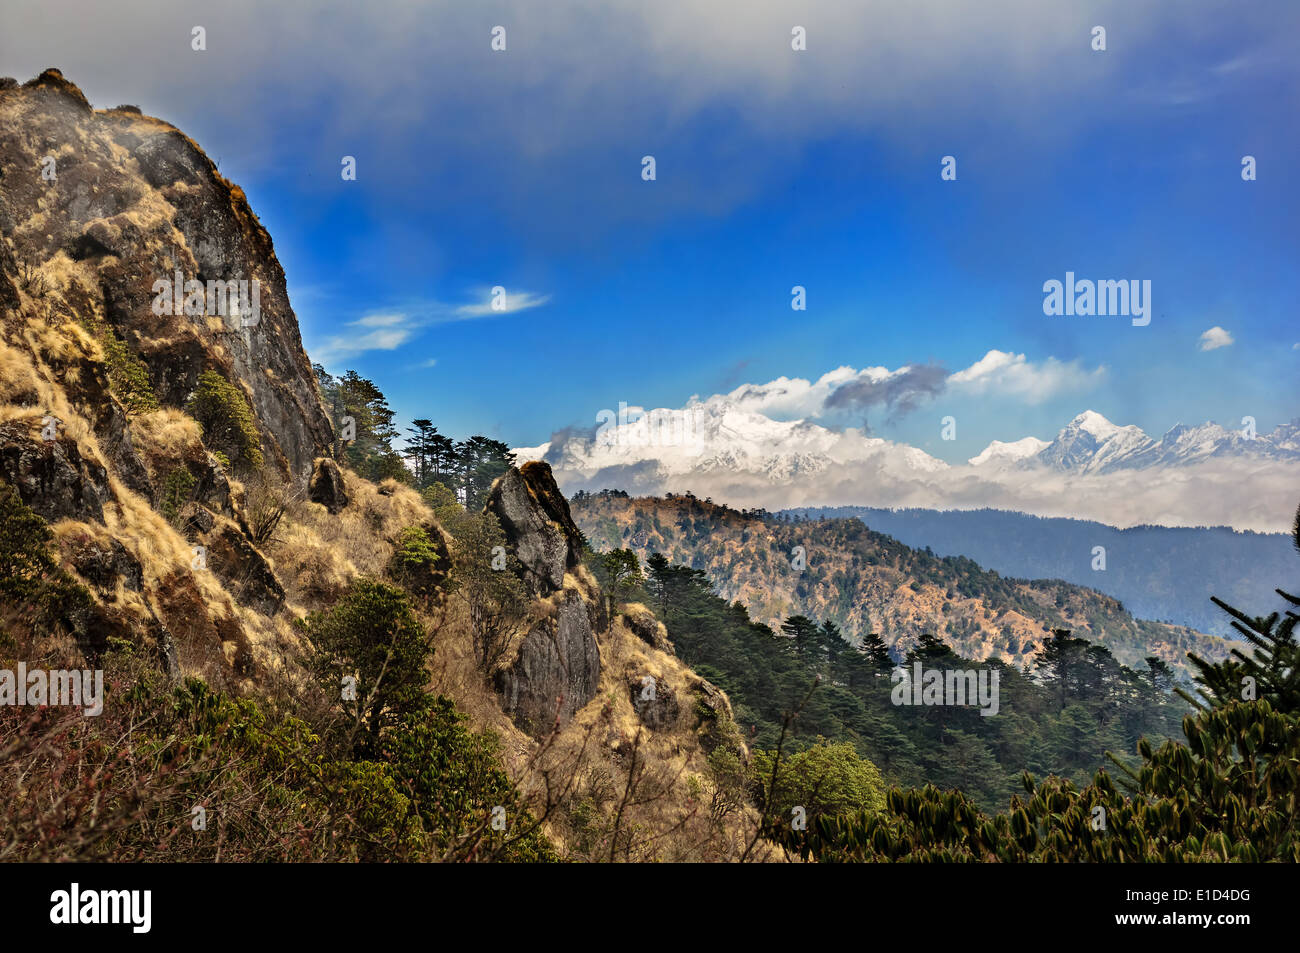 View of snowy peak Kanchenjunga from Trekking path through Himalayan mountains to Sandakphu Stock Photo